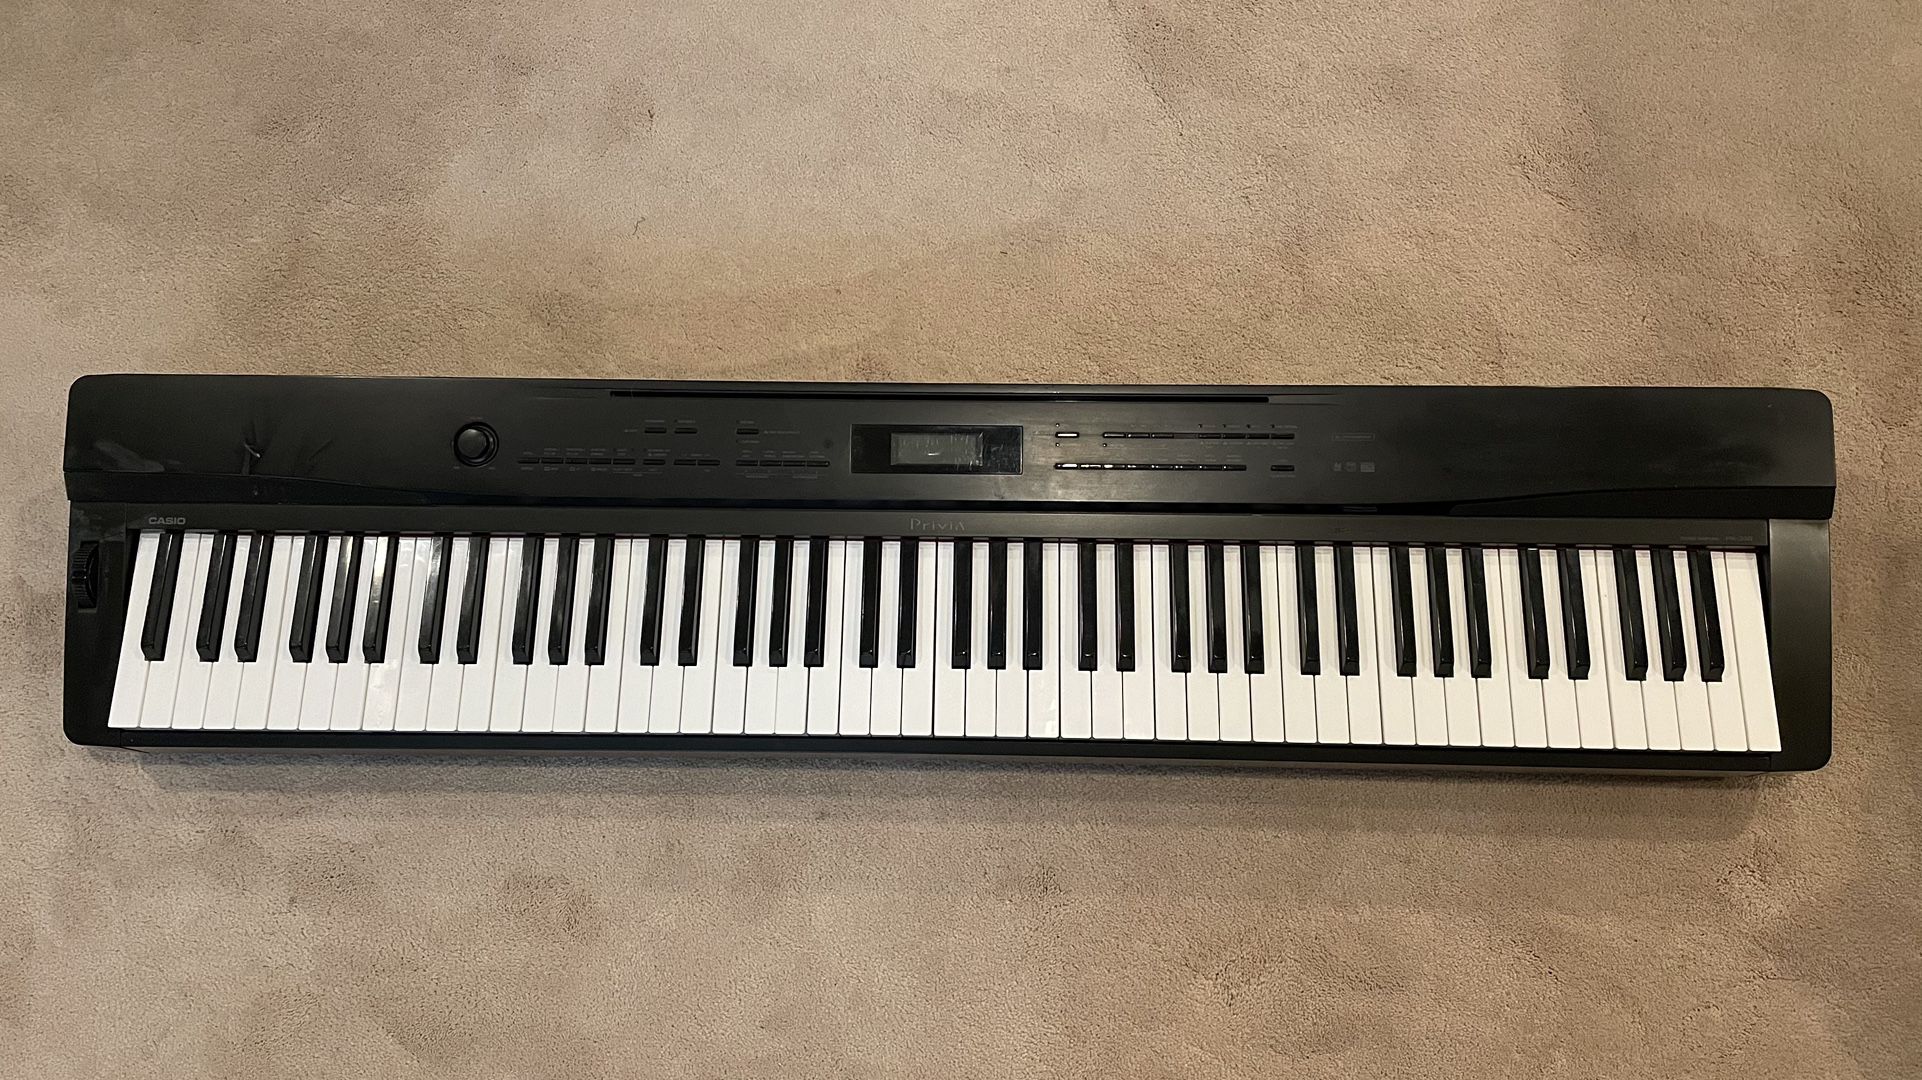 Klæbrig Fredag serviet Casio Privia PX-330 88-key Digital Piano for Sale in Lake Forest, CA -  OfferUp